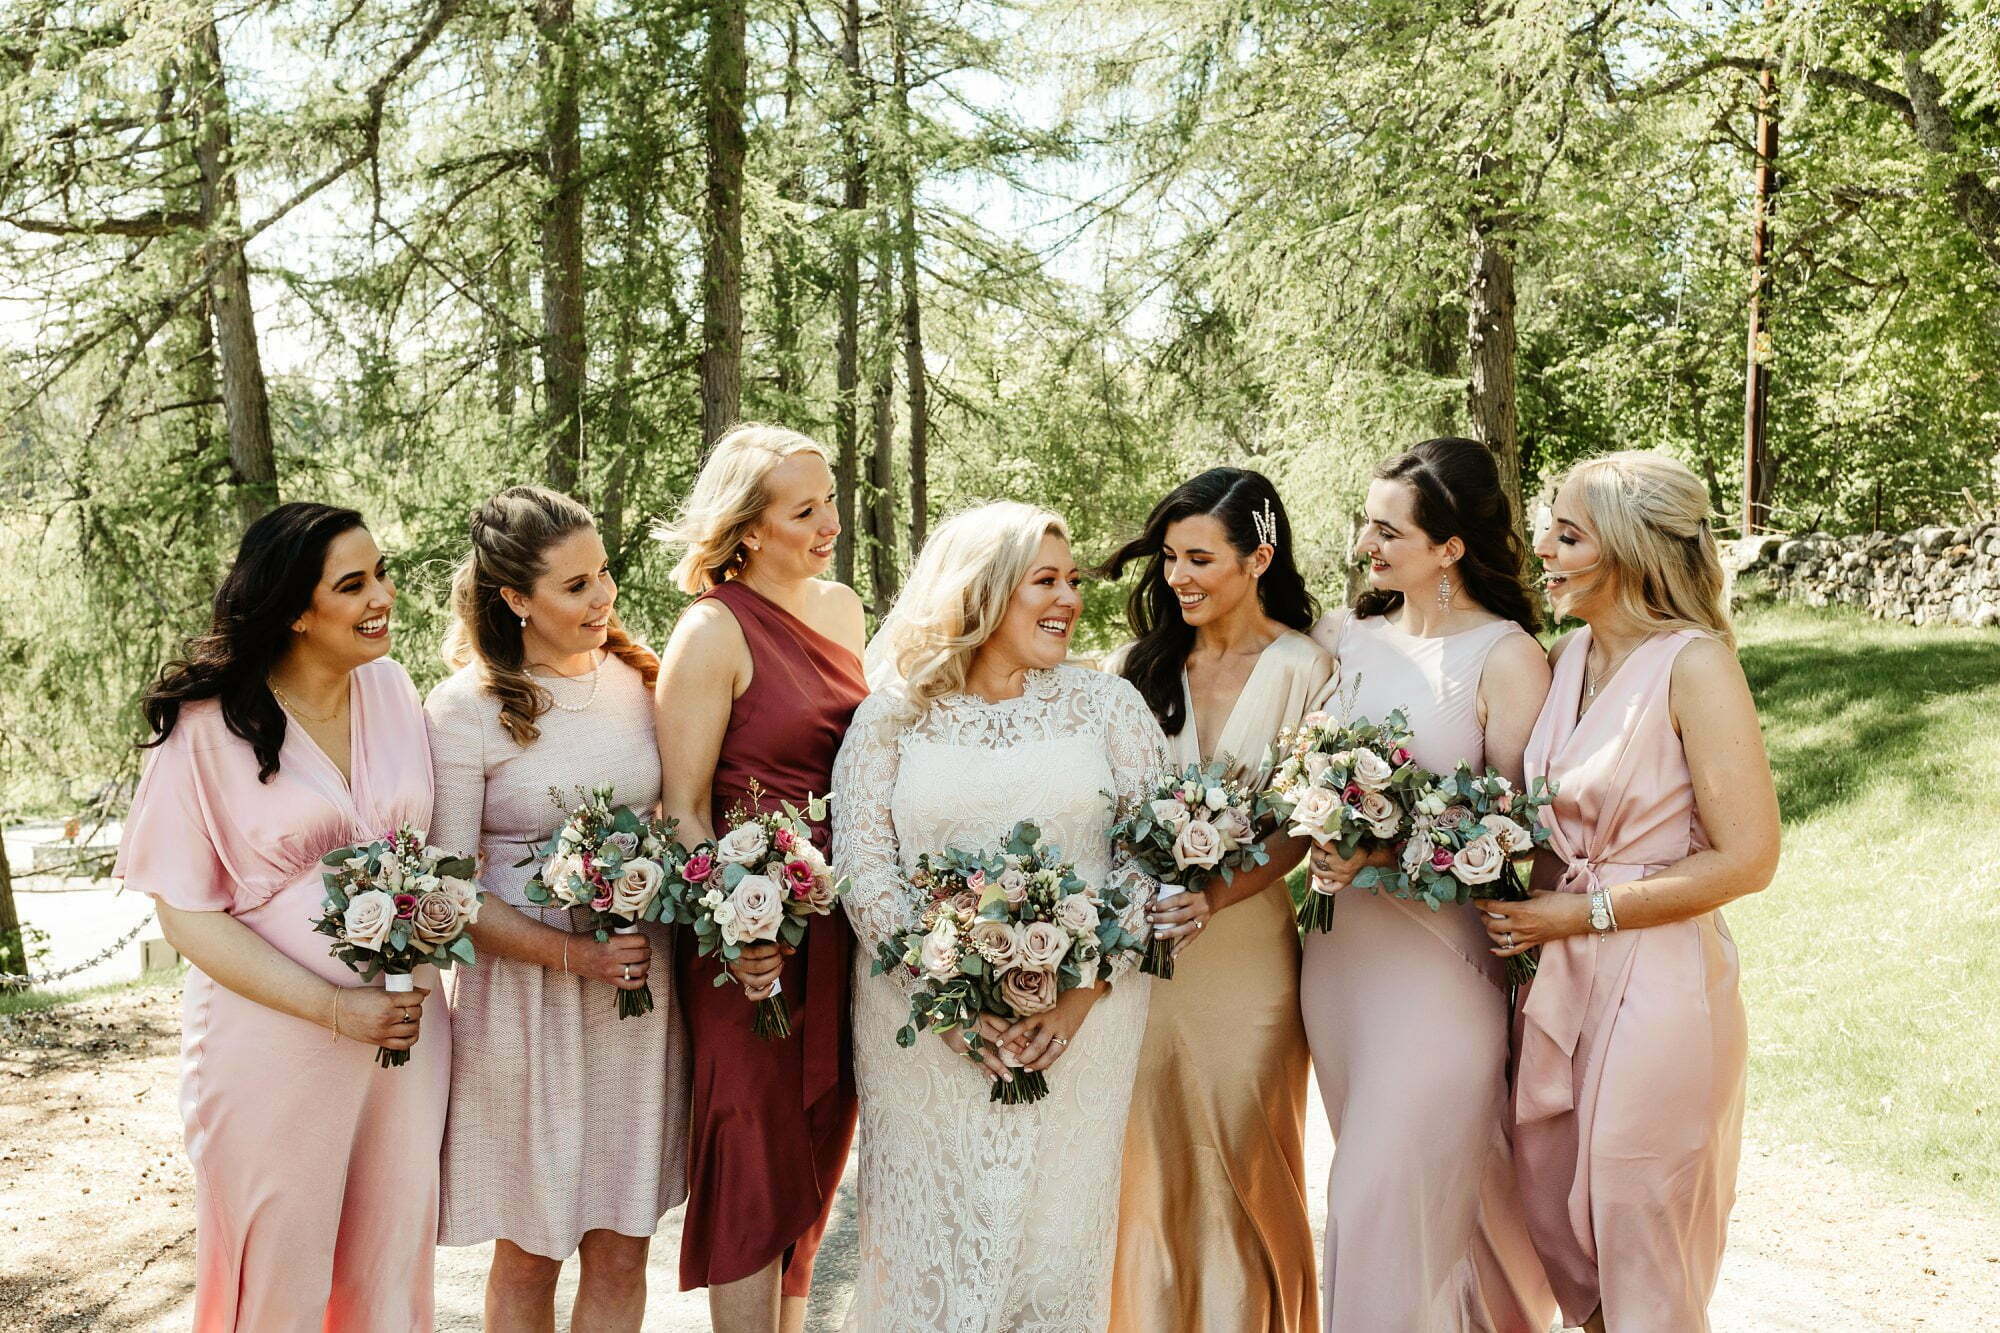 fife arms braemar micro wedding bridesmaid dresses pink mix match